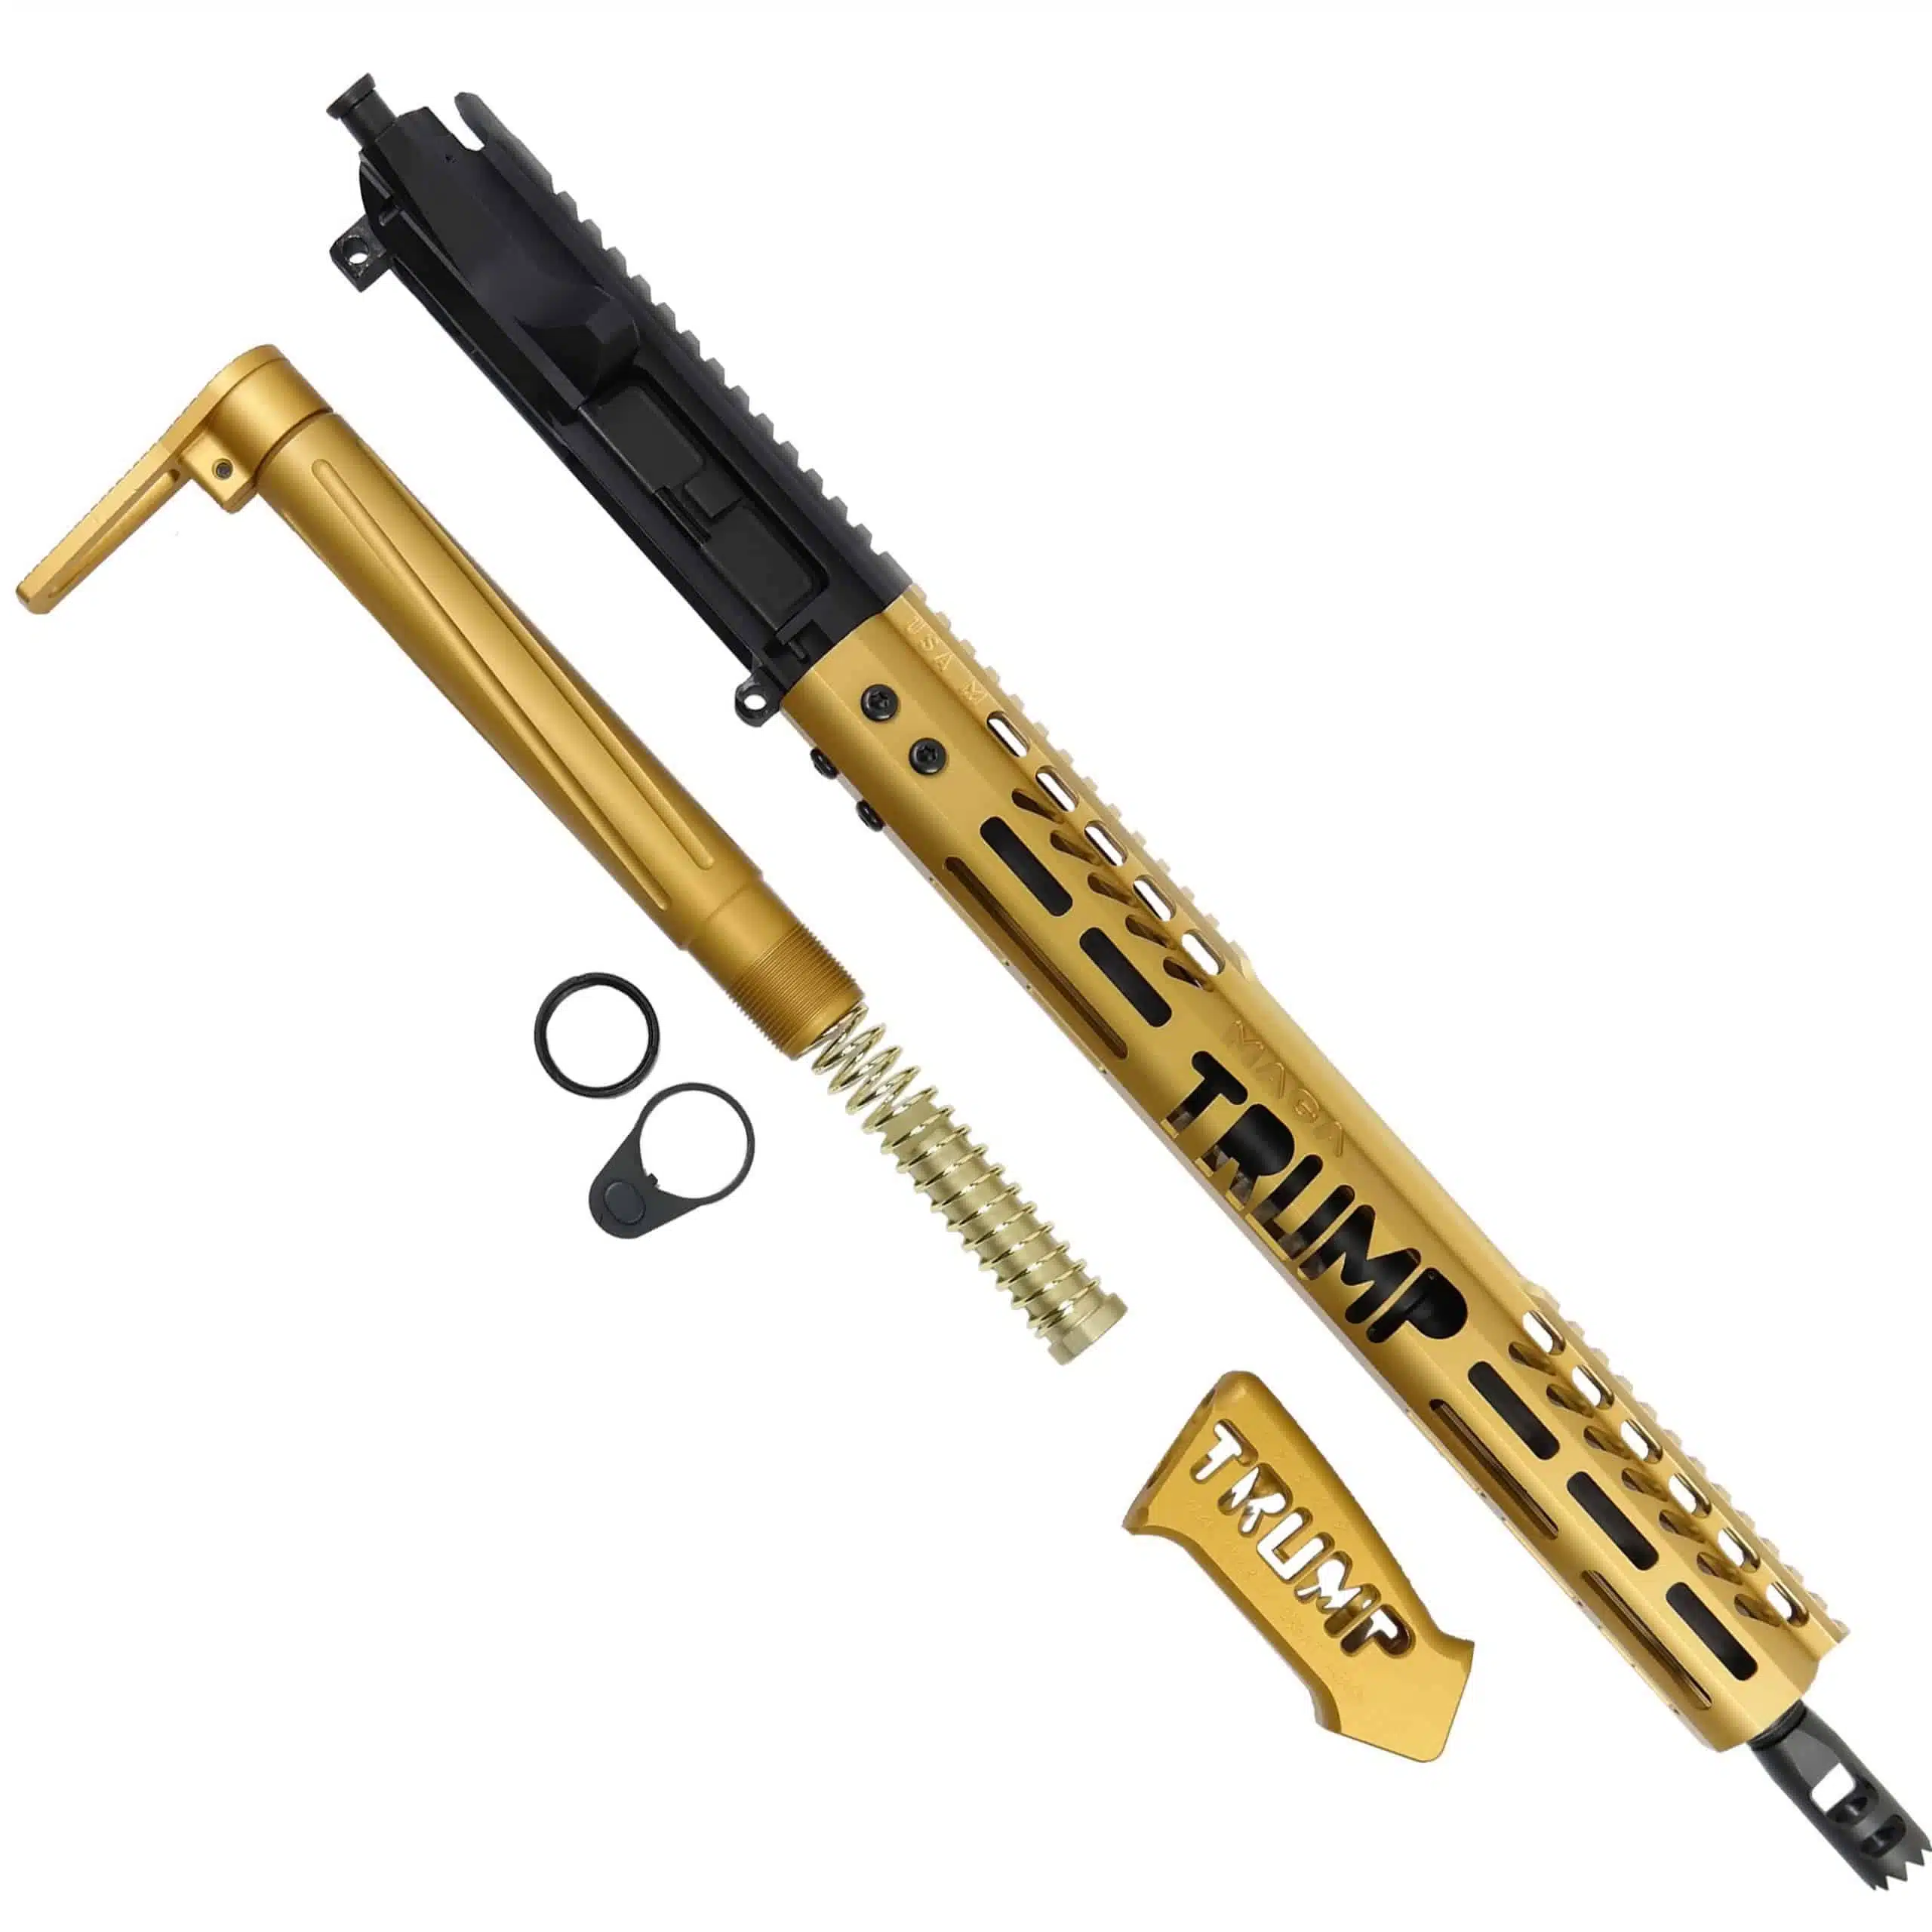 Anodized Gold Trump MAGA AR-15 Upper Kit